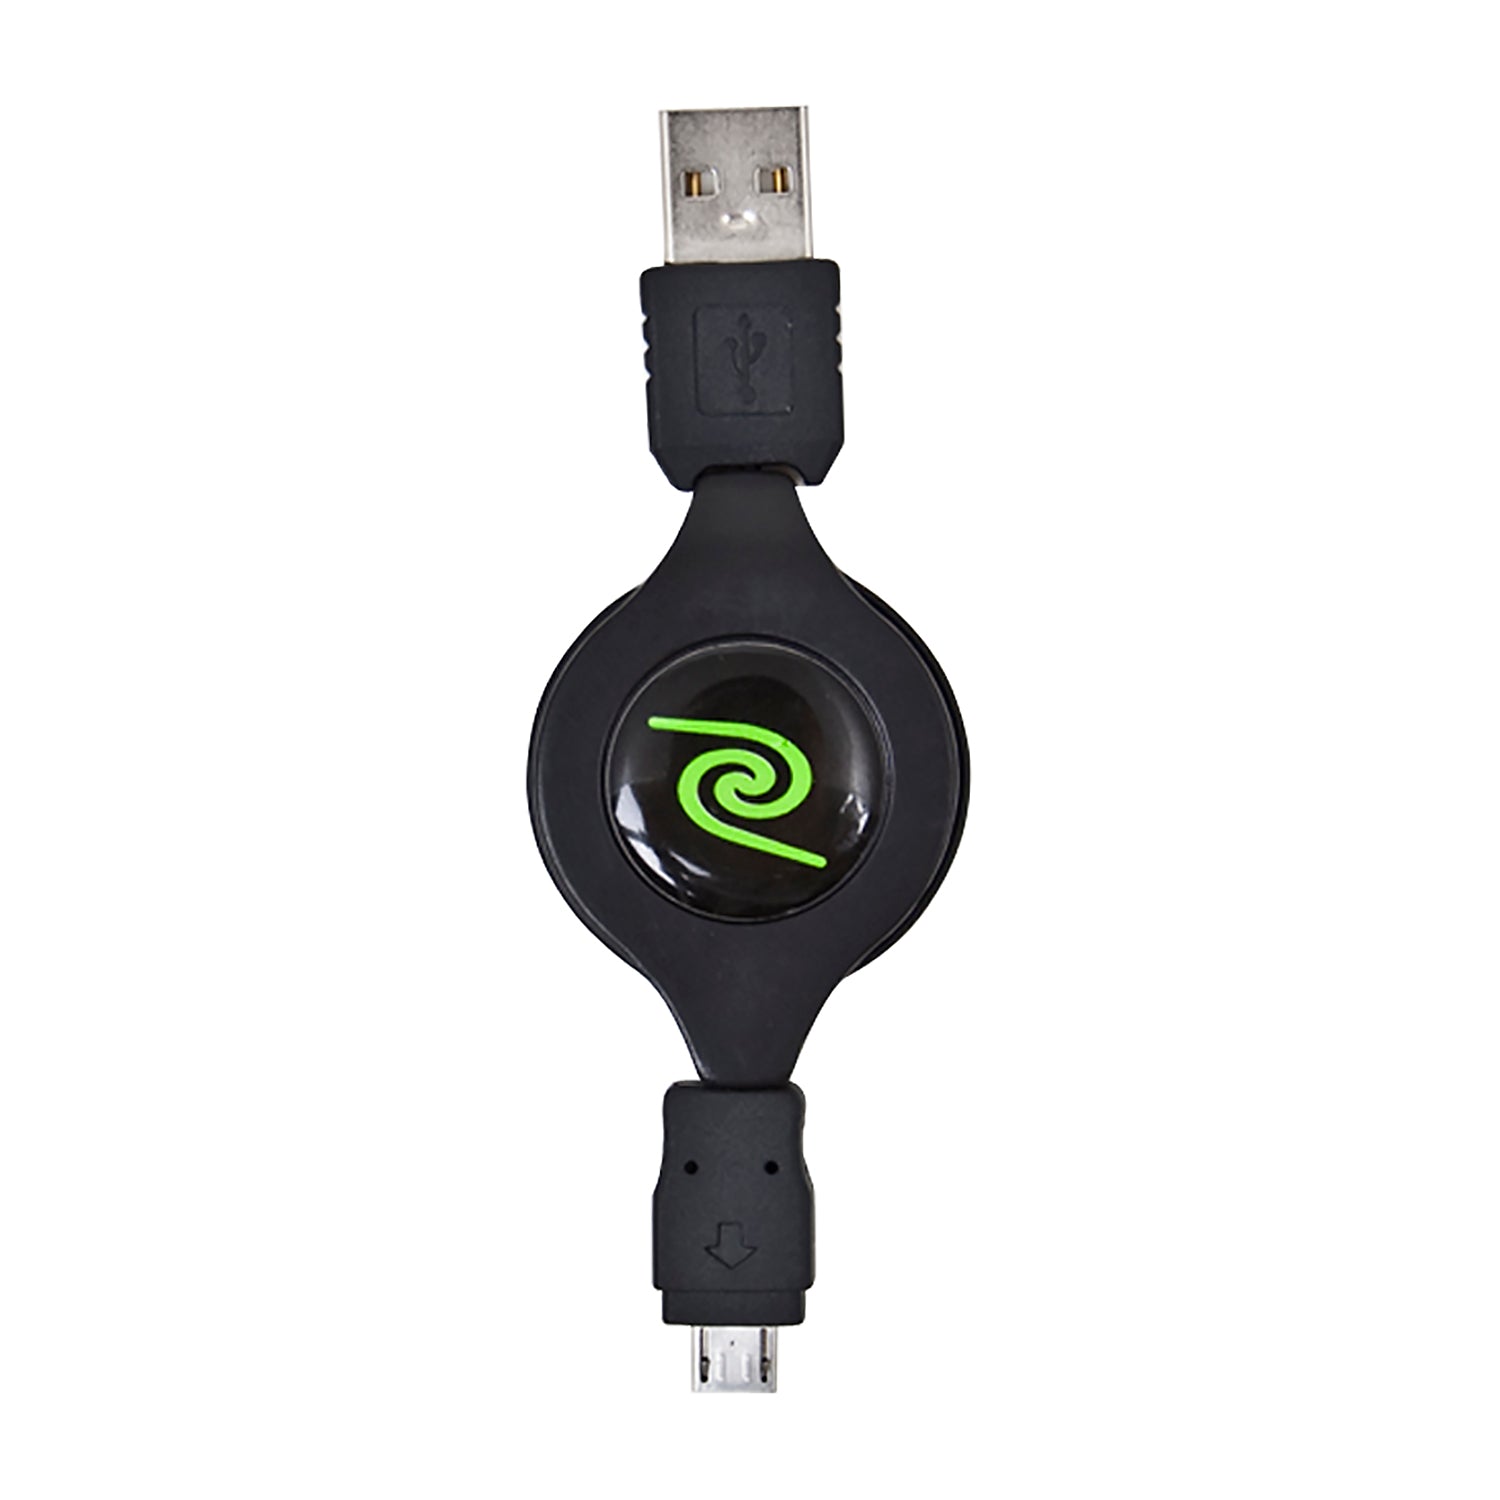 Micro USB Charging Cord | Retractable Micro USB Cable | Black